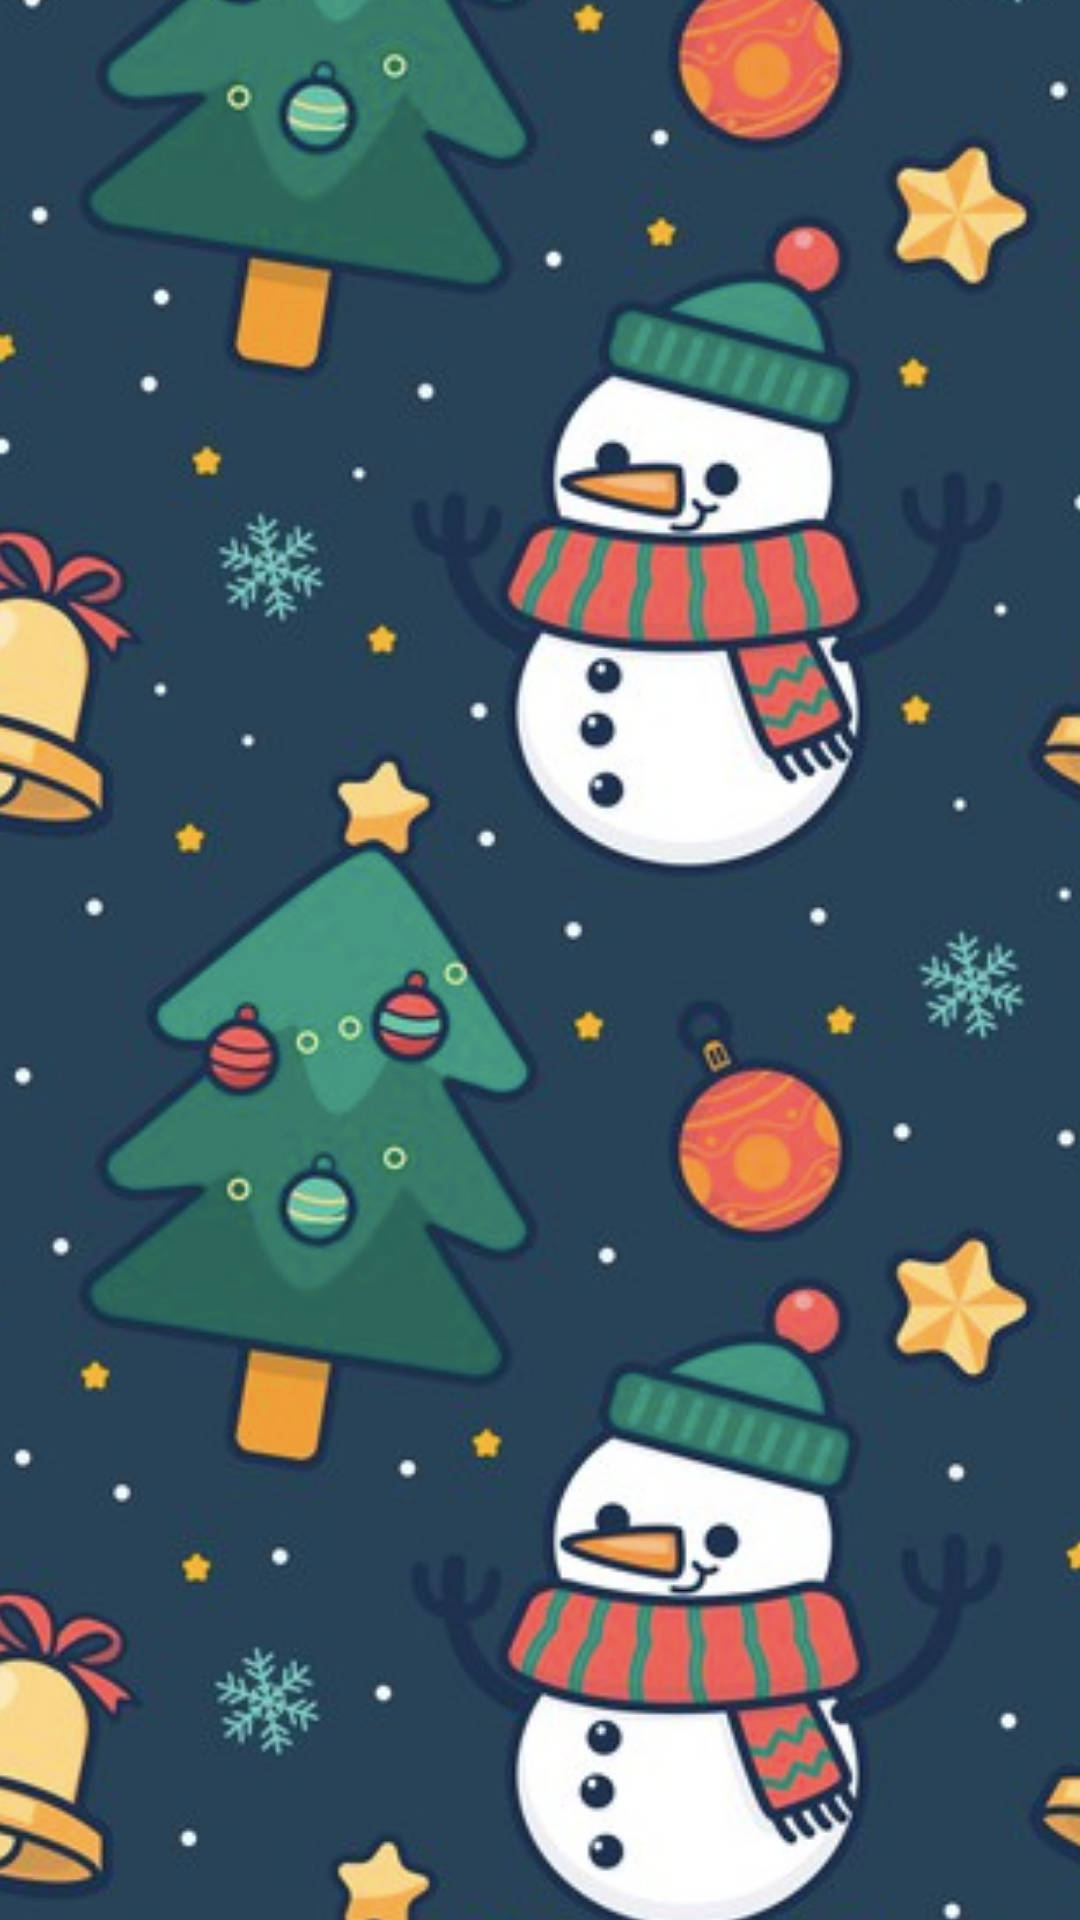 Sød Jul Iphone Wallpaper